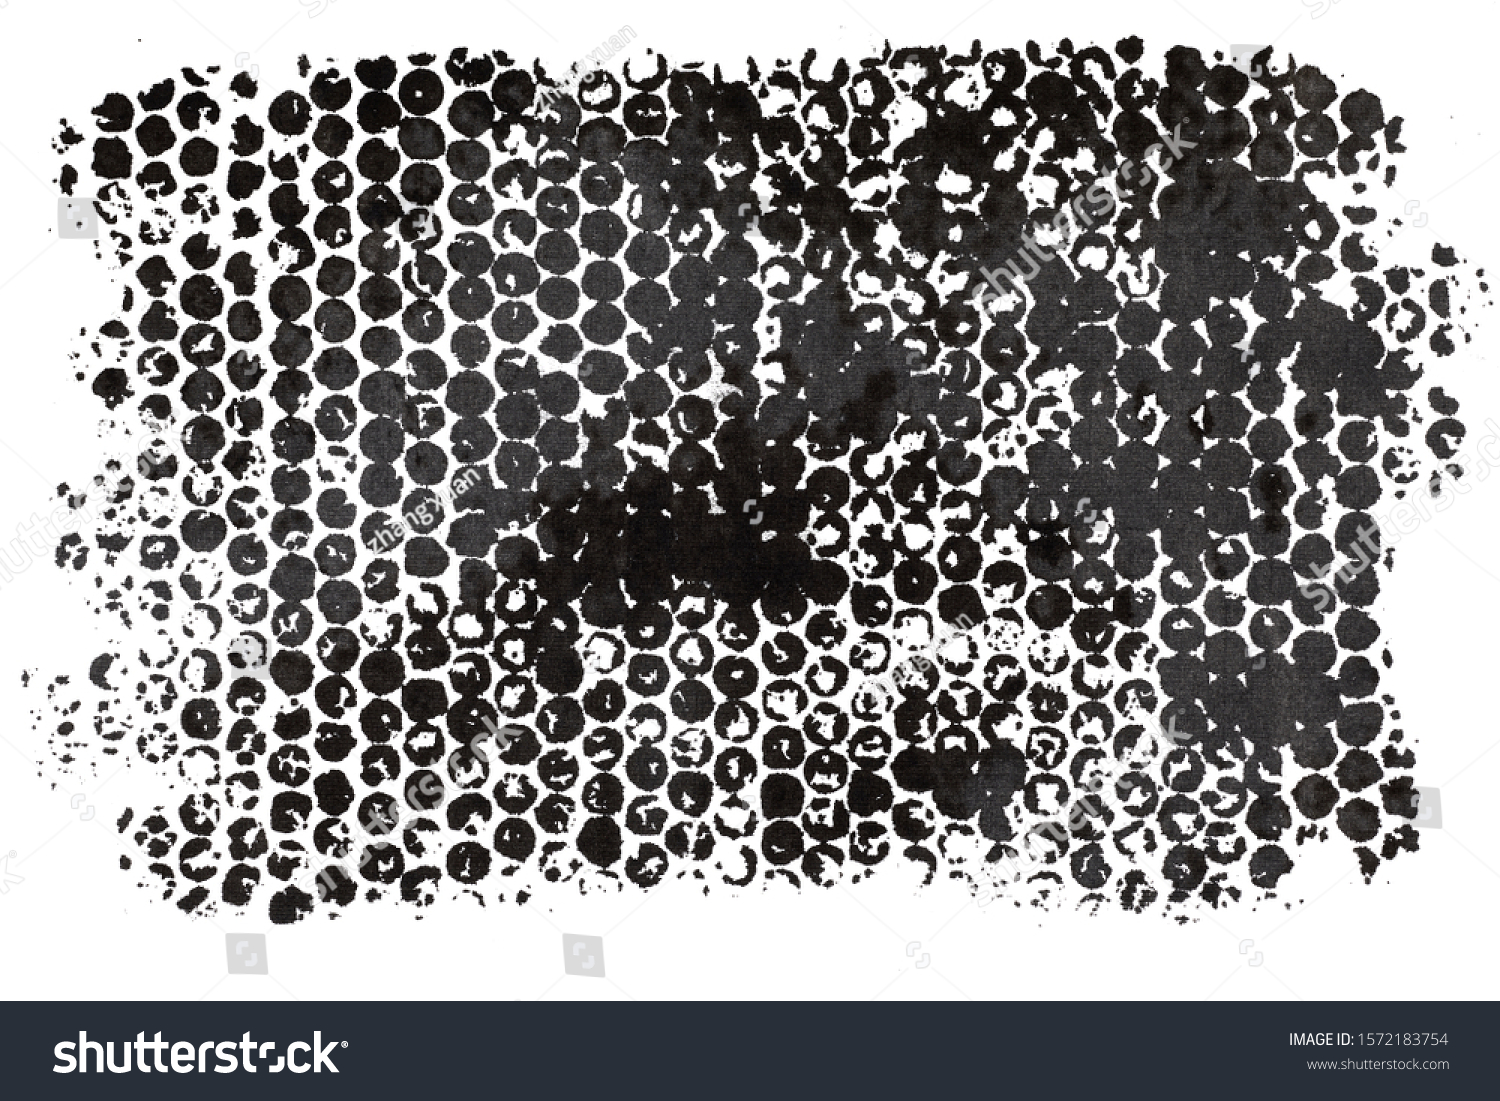 Hand drawn black dots texture background #1572183754